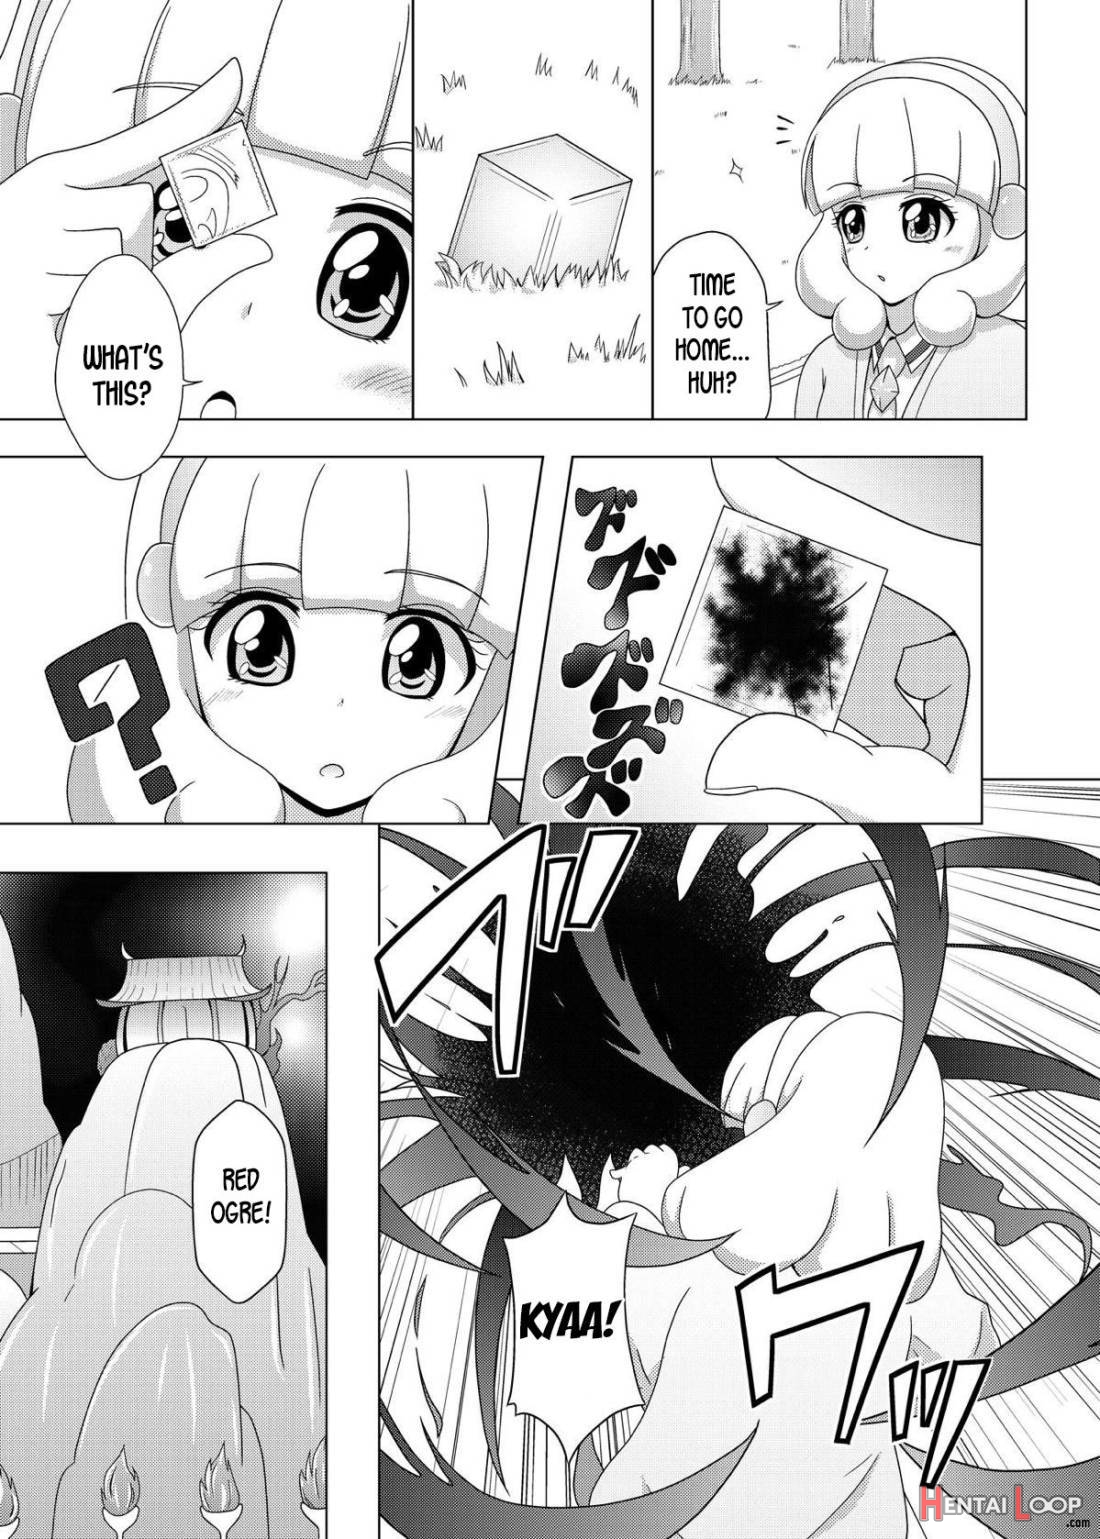 Bad End Yayoi-chan! page 4